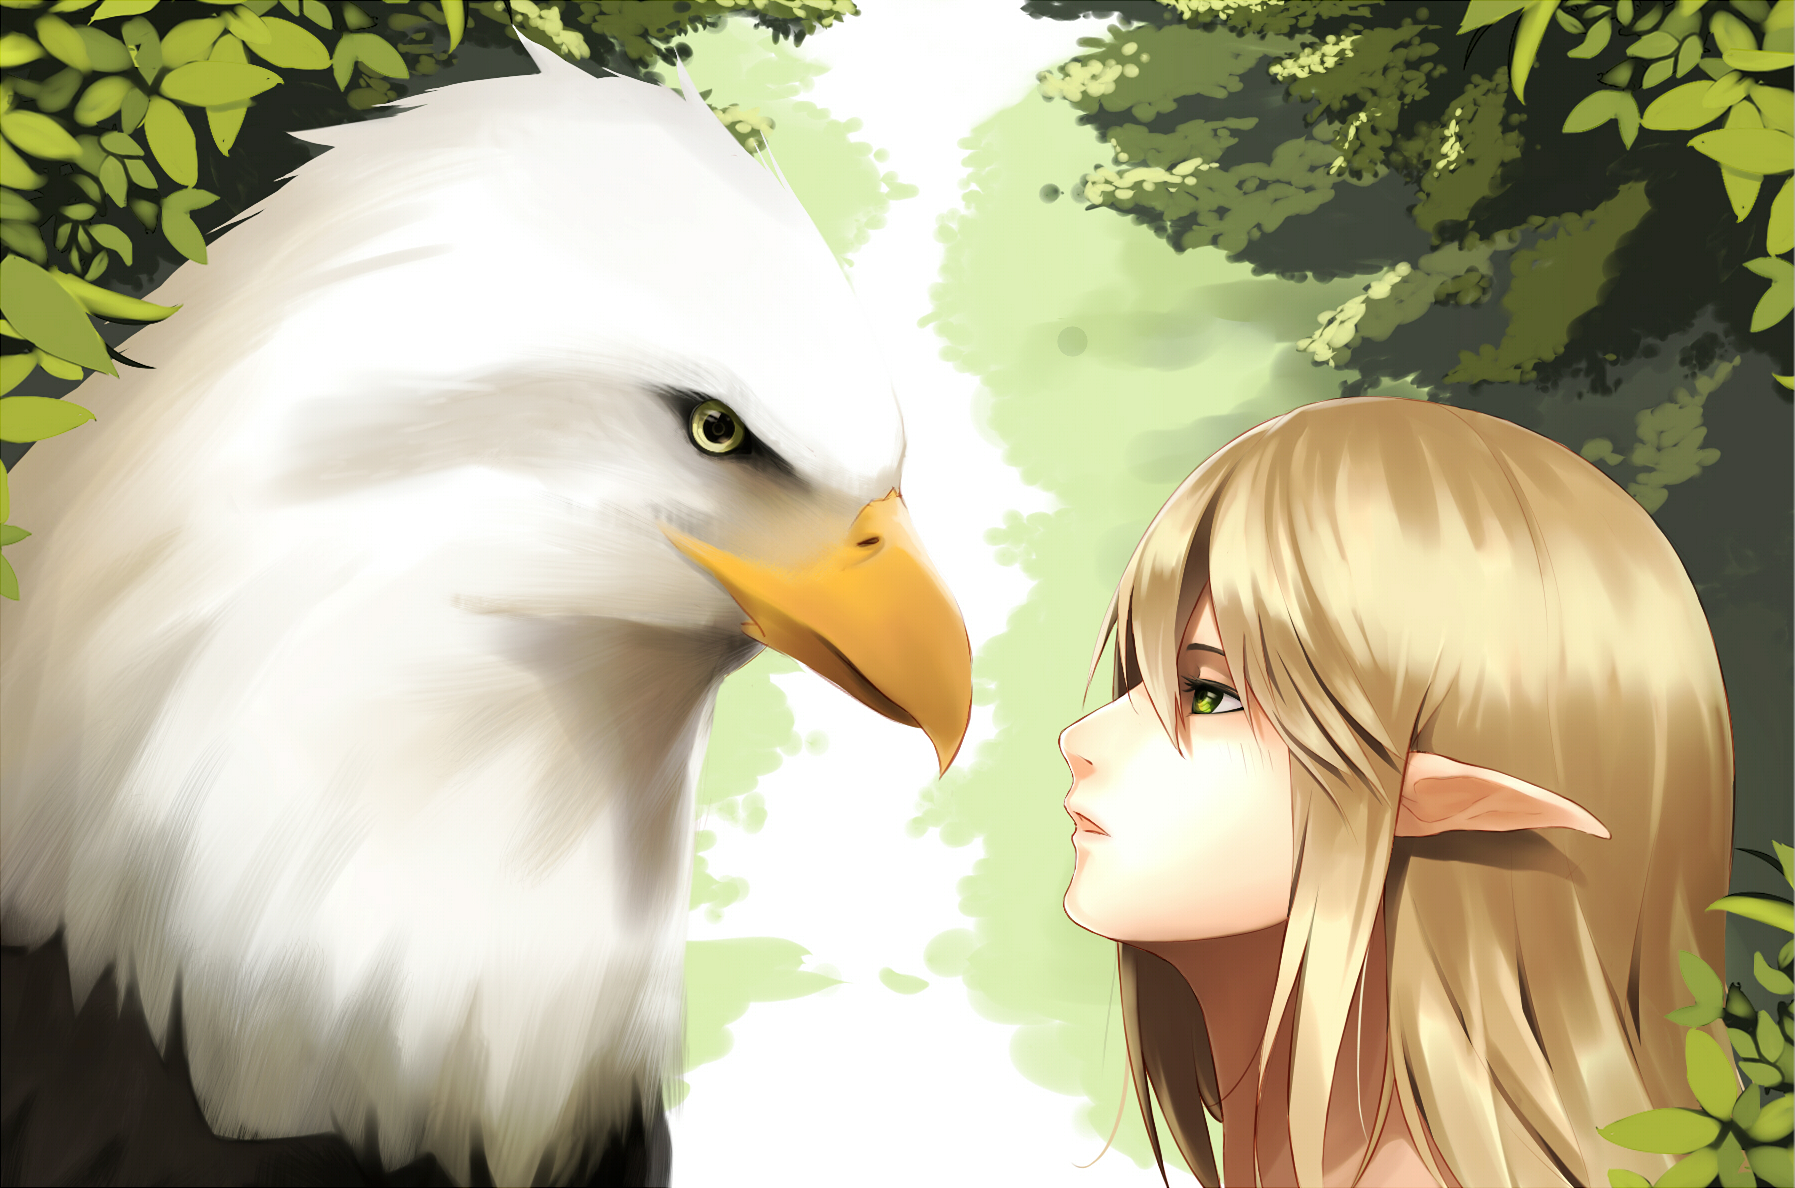 Anime Eagle 3d model 3ds Max files free download - modeling 51040 on CadNav